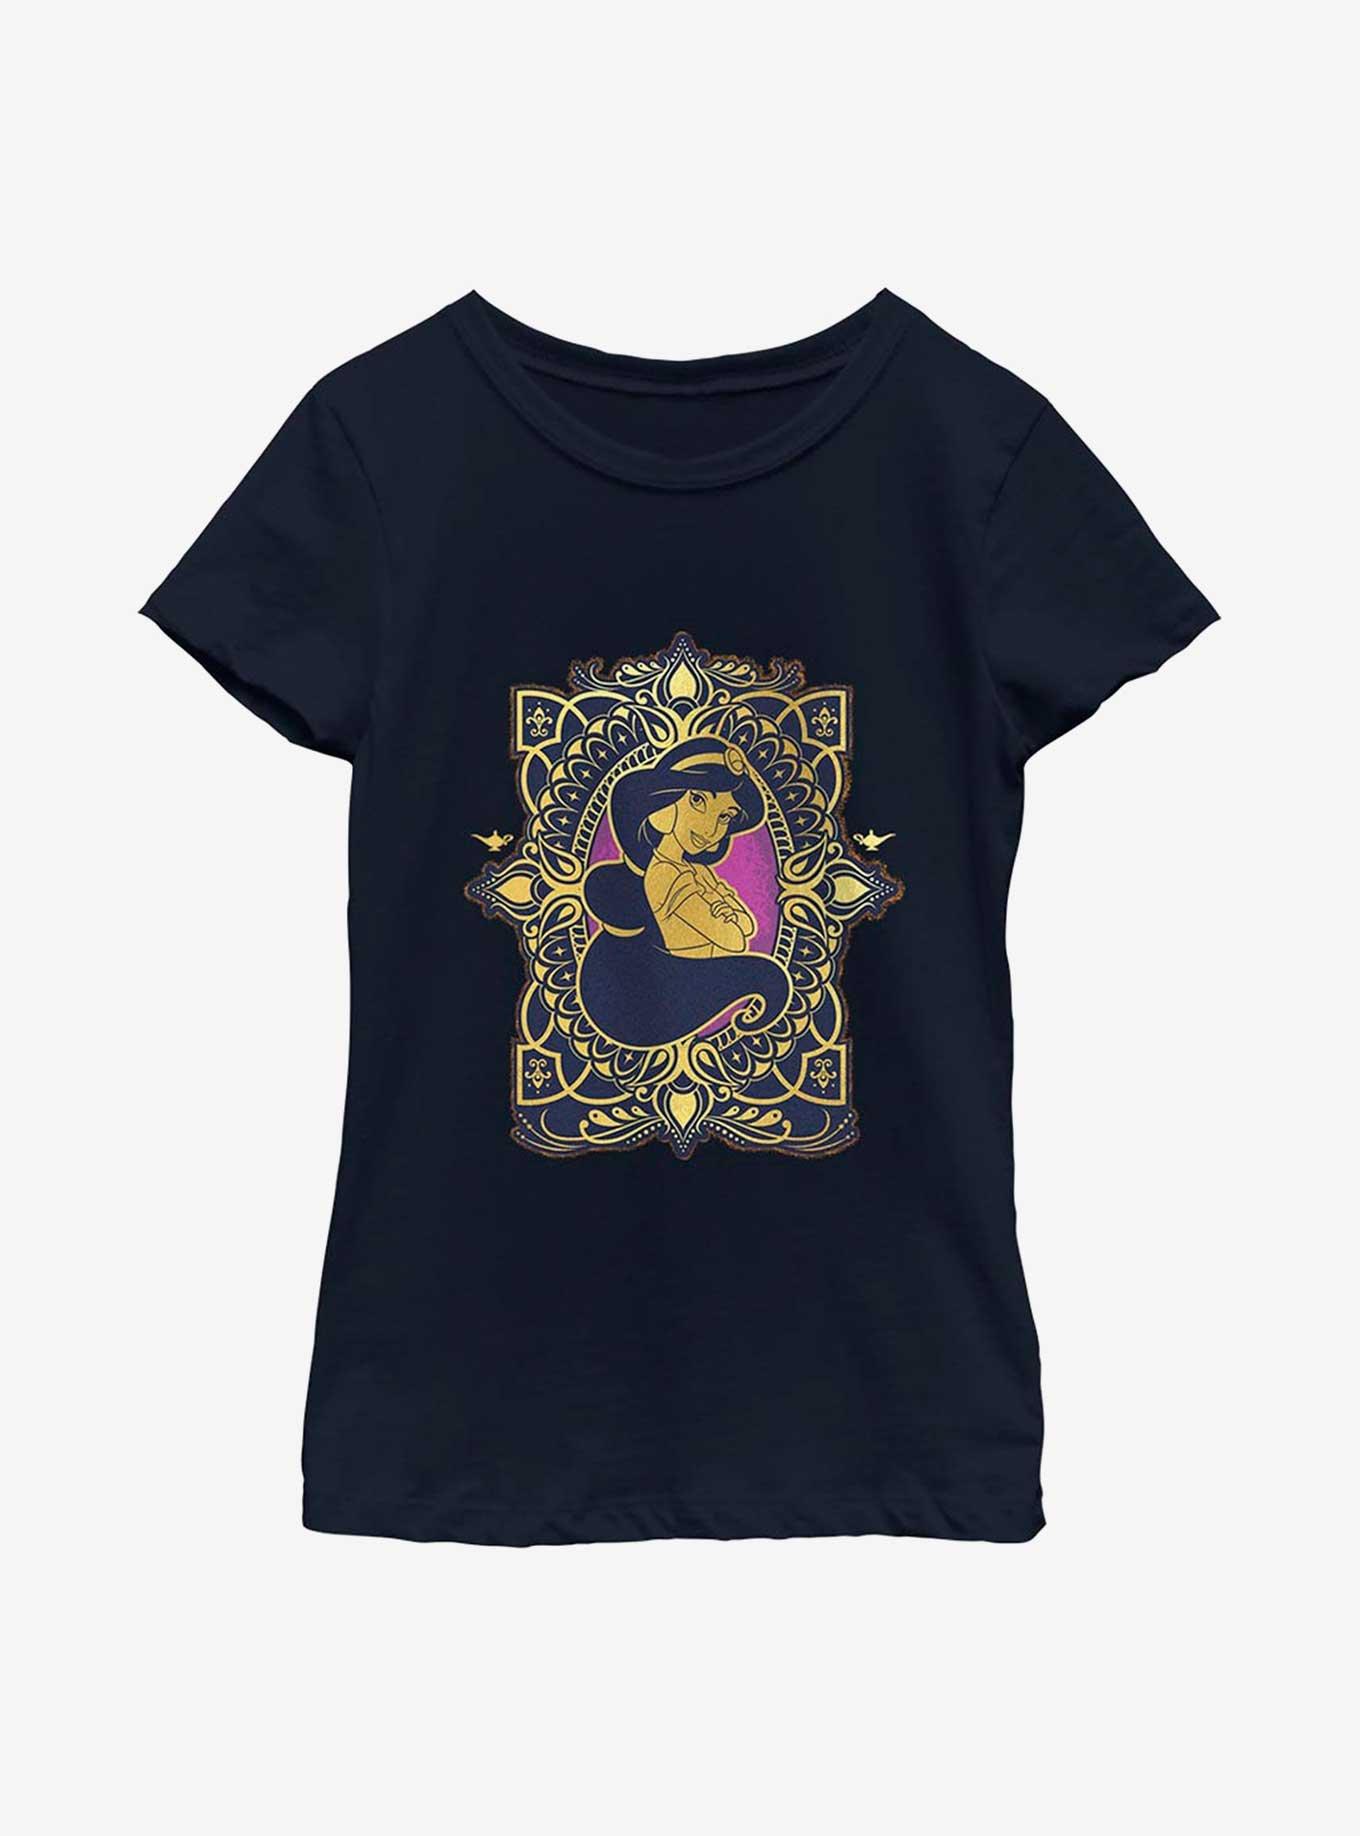 Disney Aladdin 30th Anniversary Jasmine Badge Youth Girls T-Shirt, NAVY, hi-res